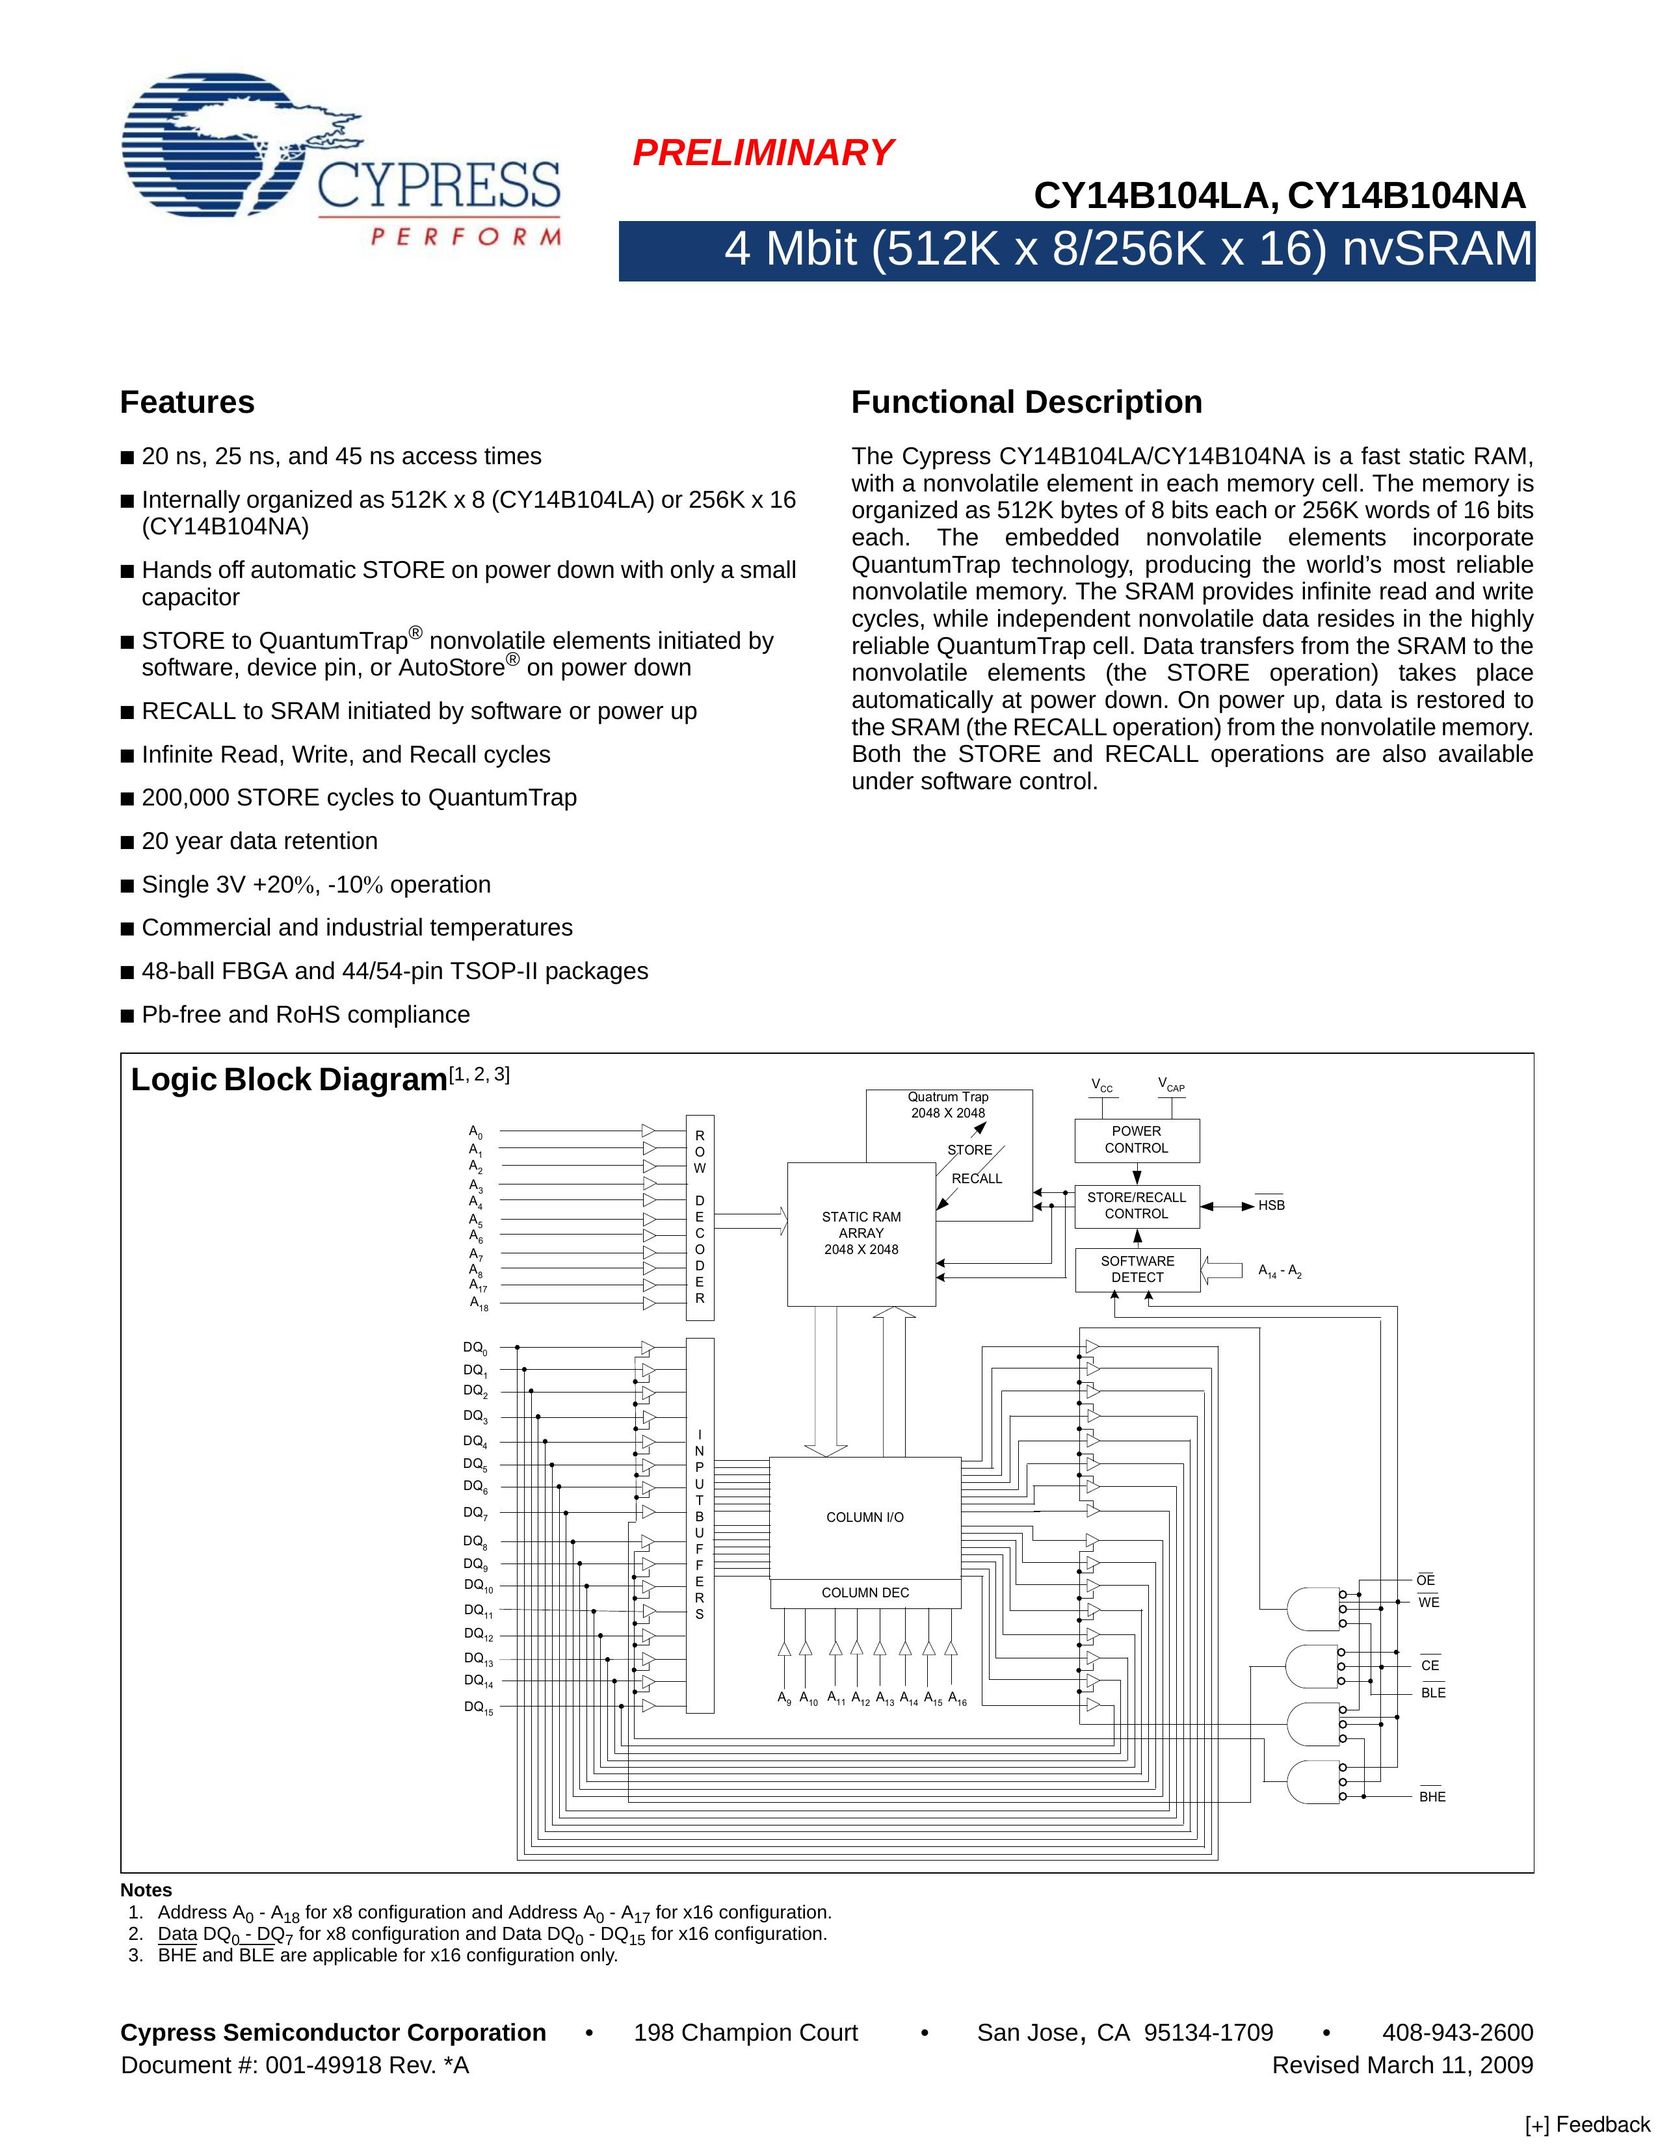 Cypress CY14B104LA Computer Hardware User Manual